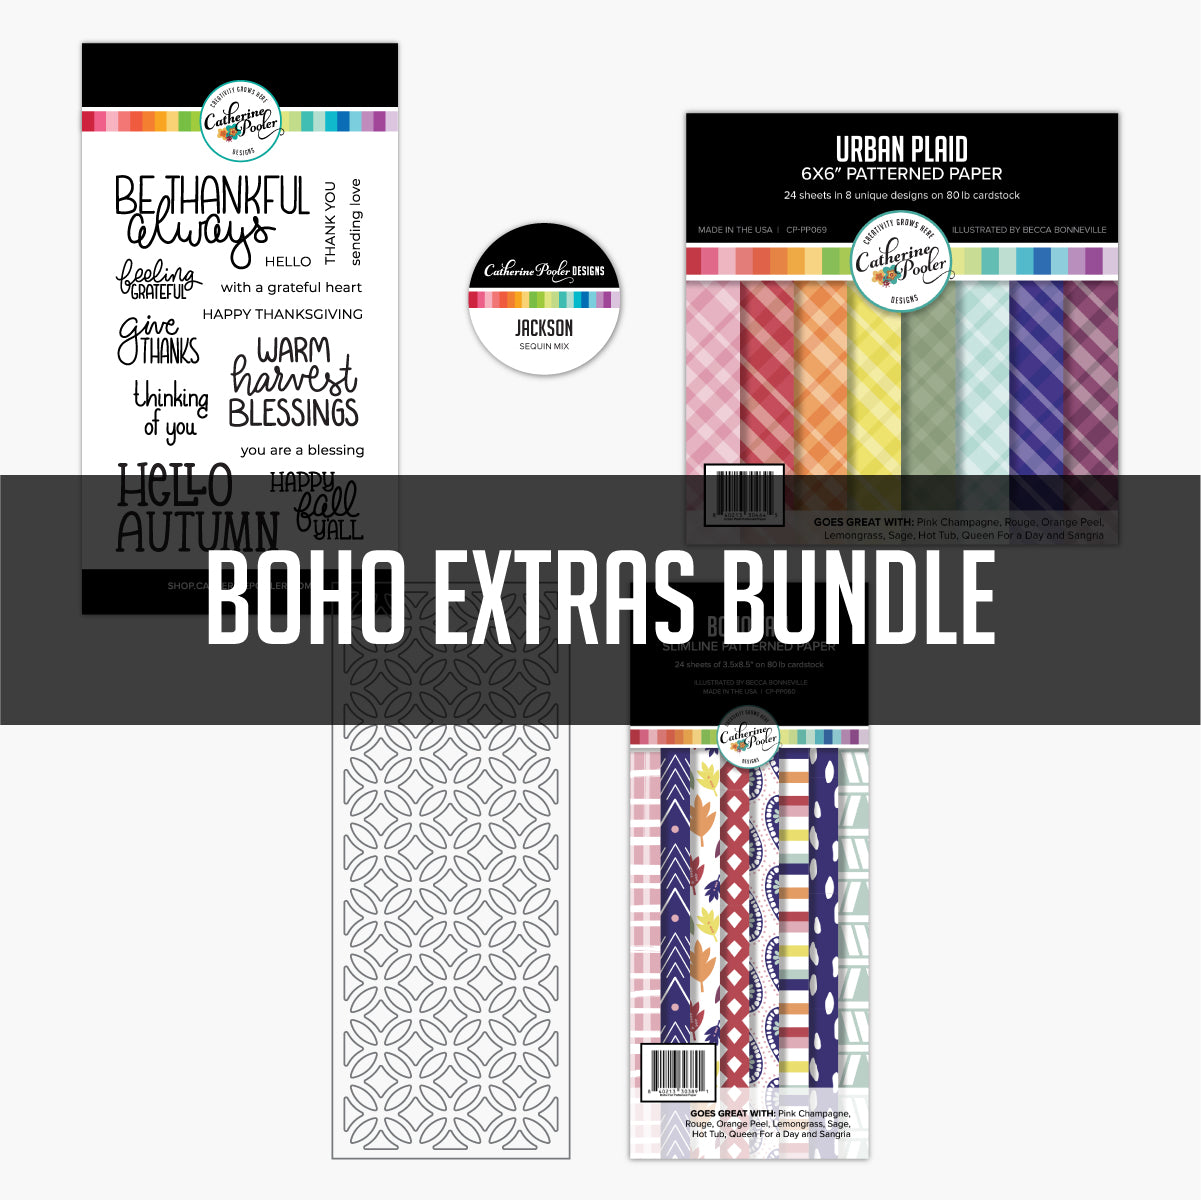 Boho Extras Bundle – Catherine Pooler Designs